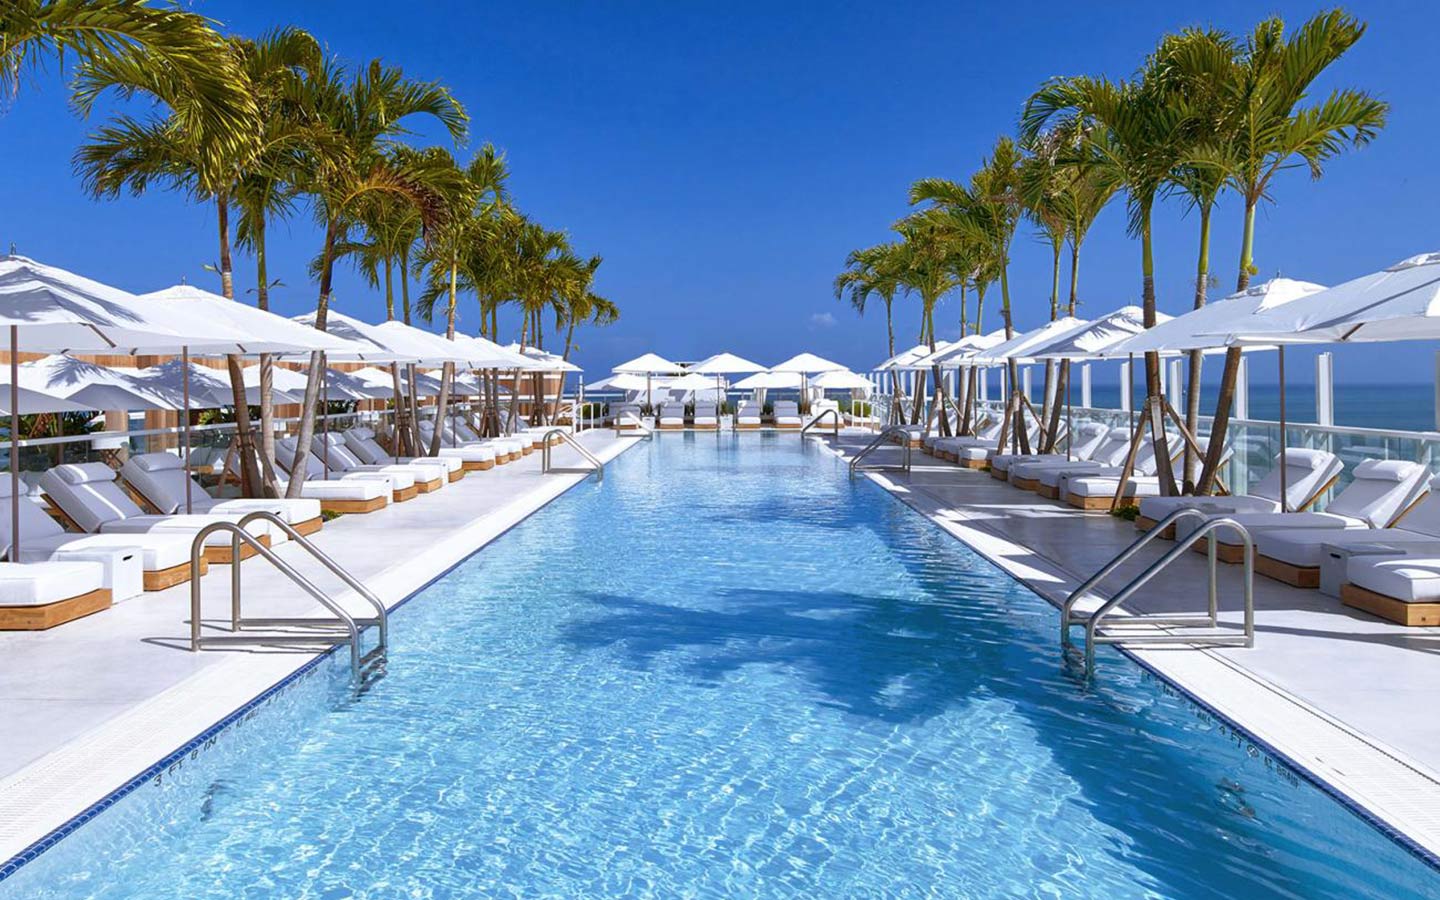 1 Hotel South Beach Watr Rooftop Pool 1440x900 